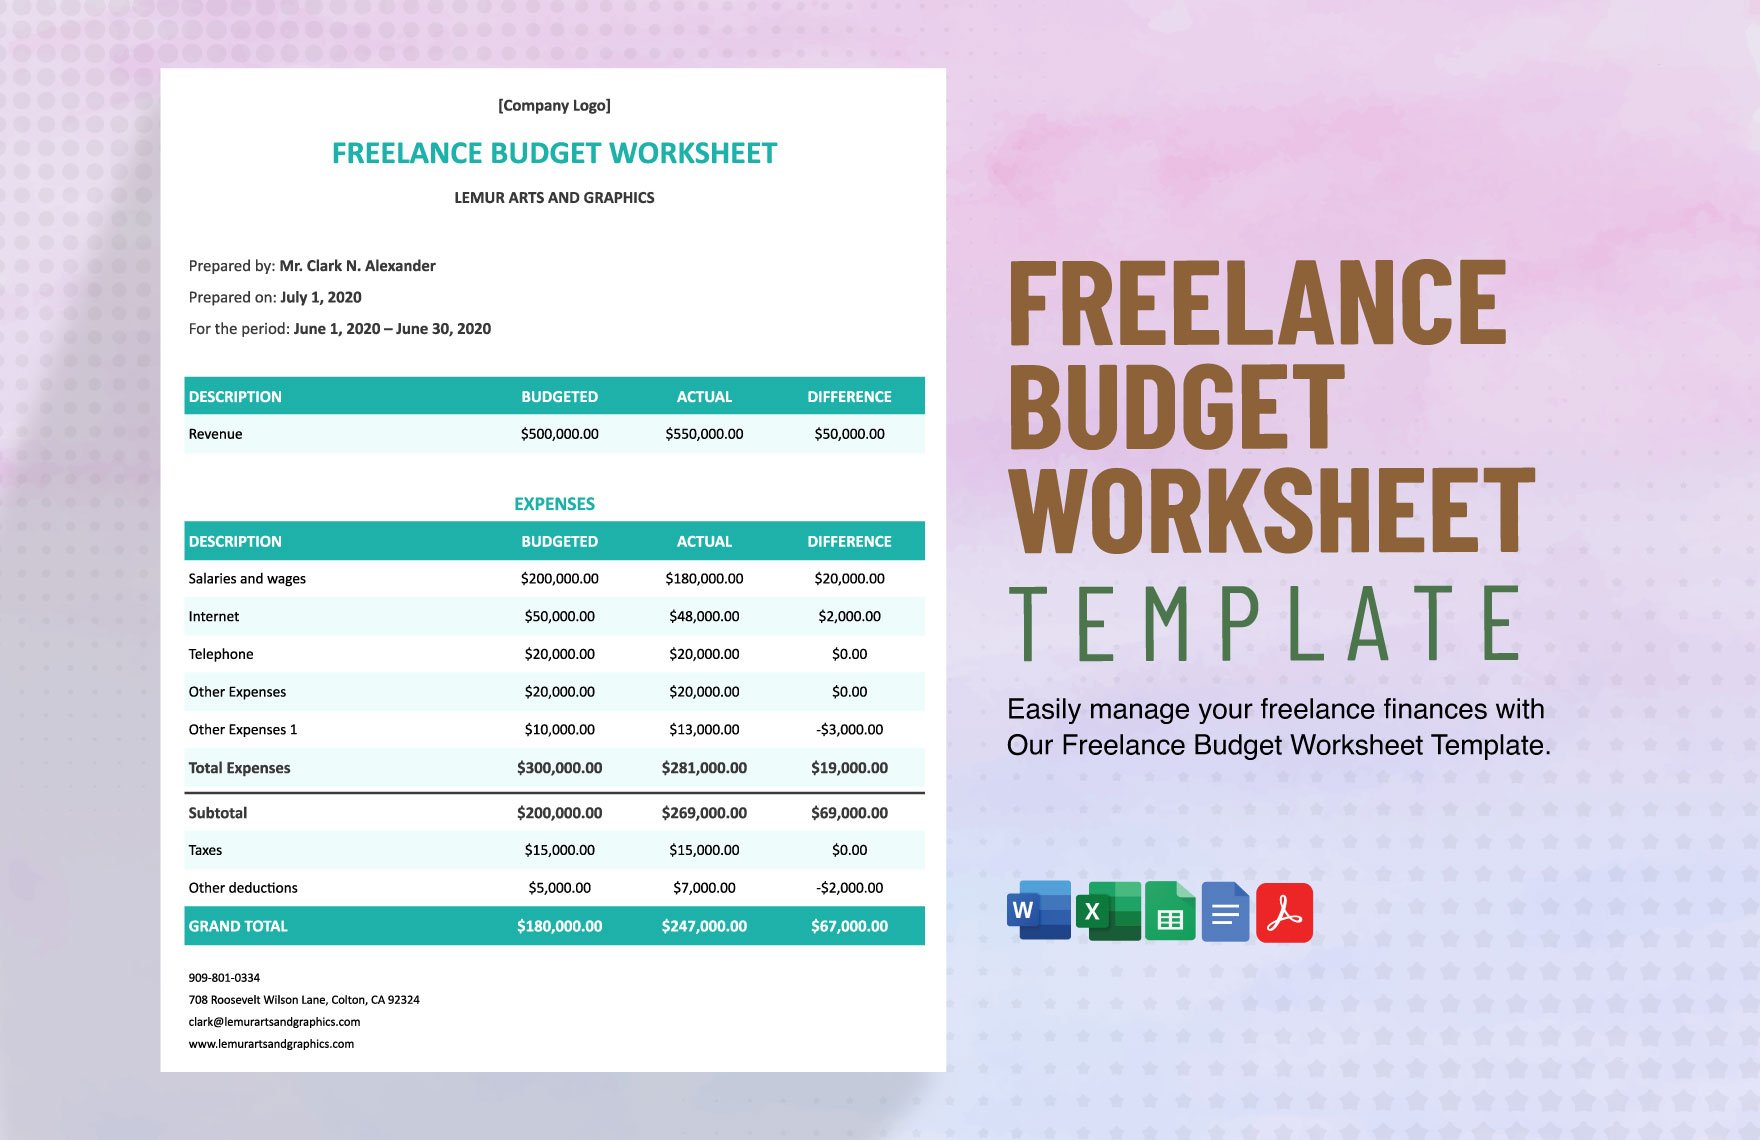 Freelance Budget Worksheet Template in Word, Google Docs, Excel, PDF, Google Sheets